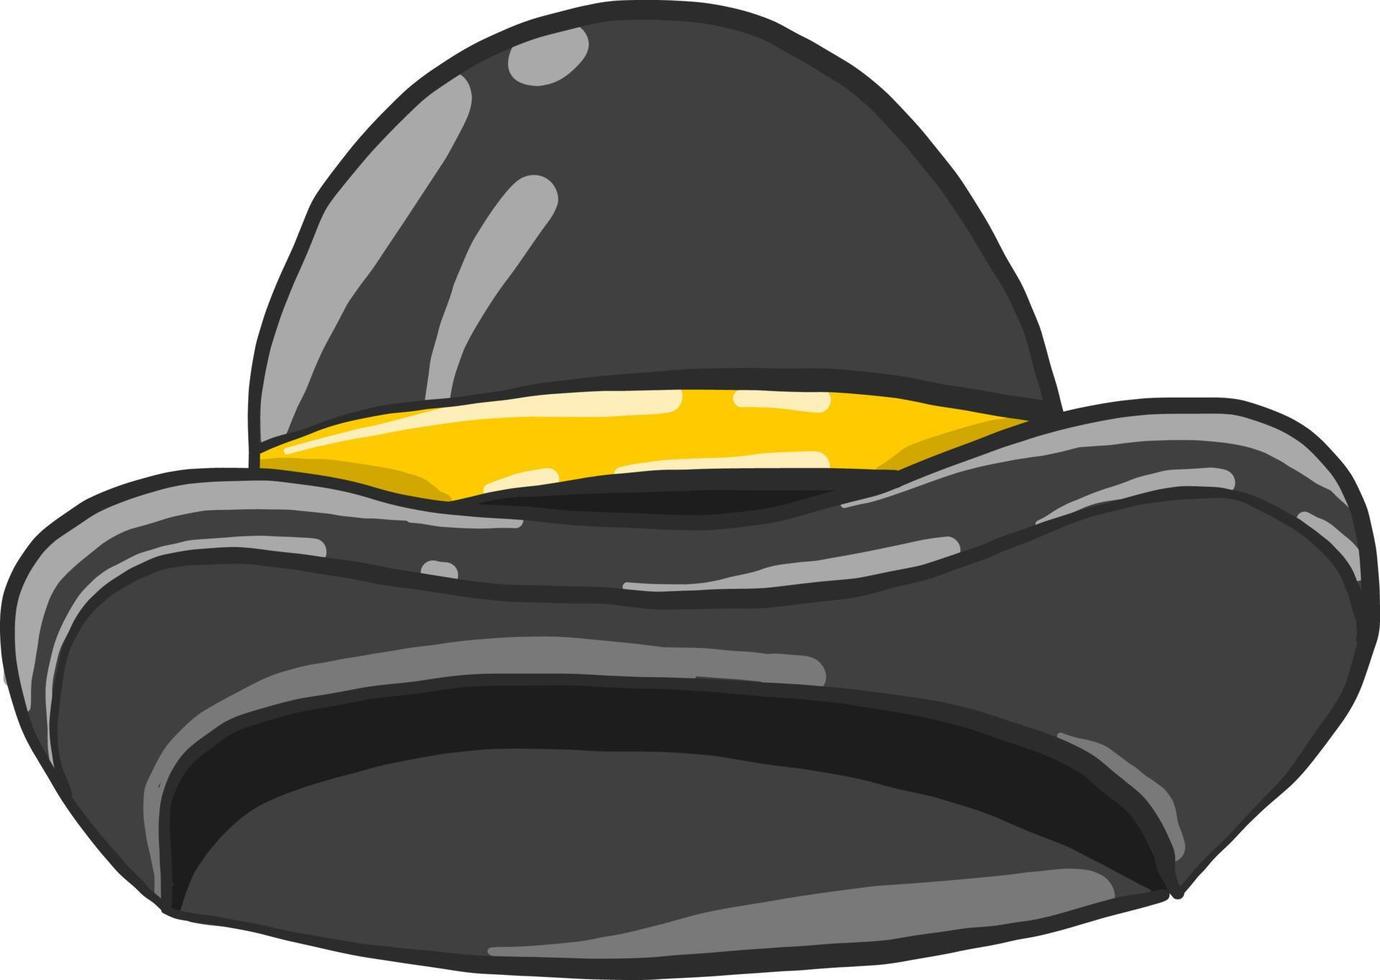 Black hat, illustration, vector on white background.